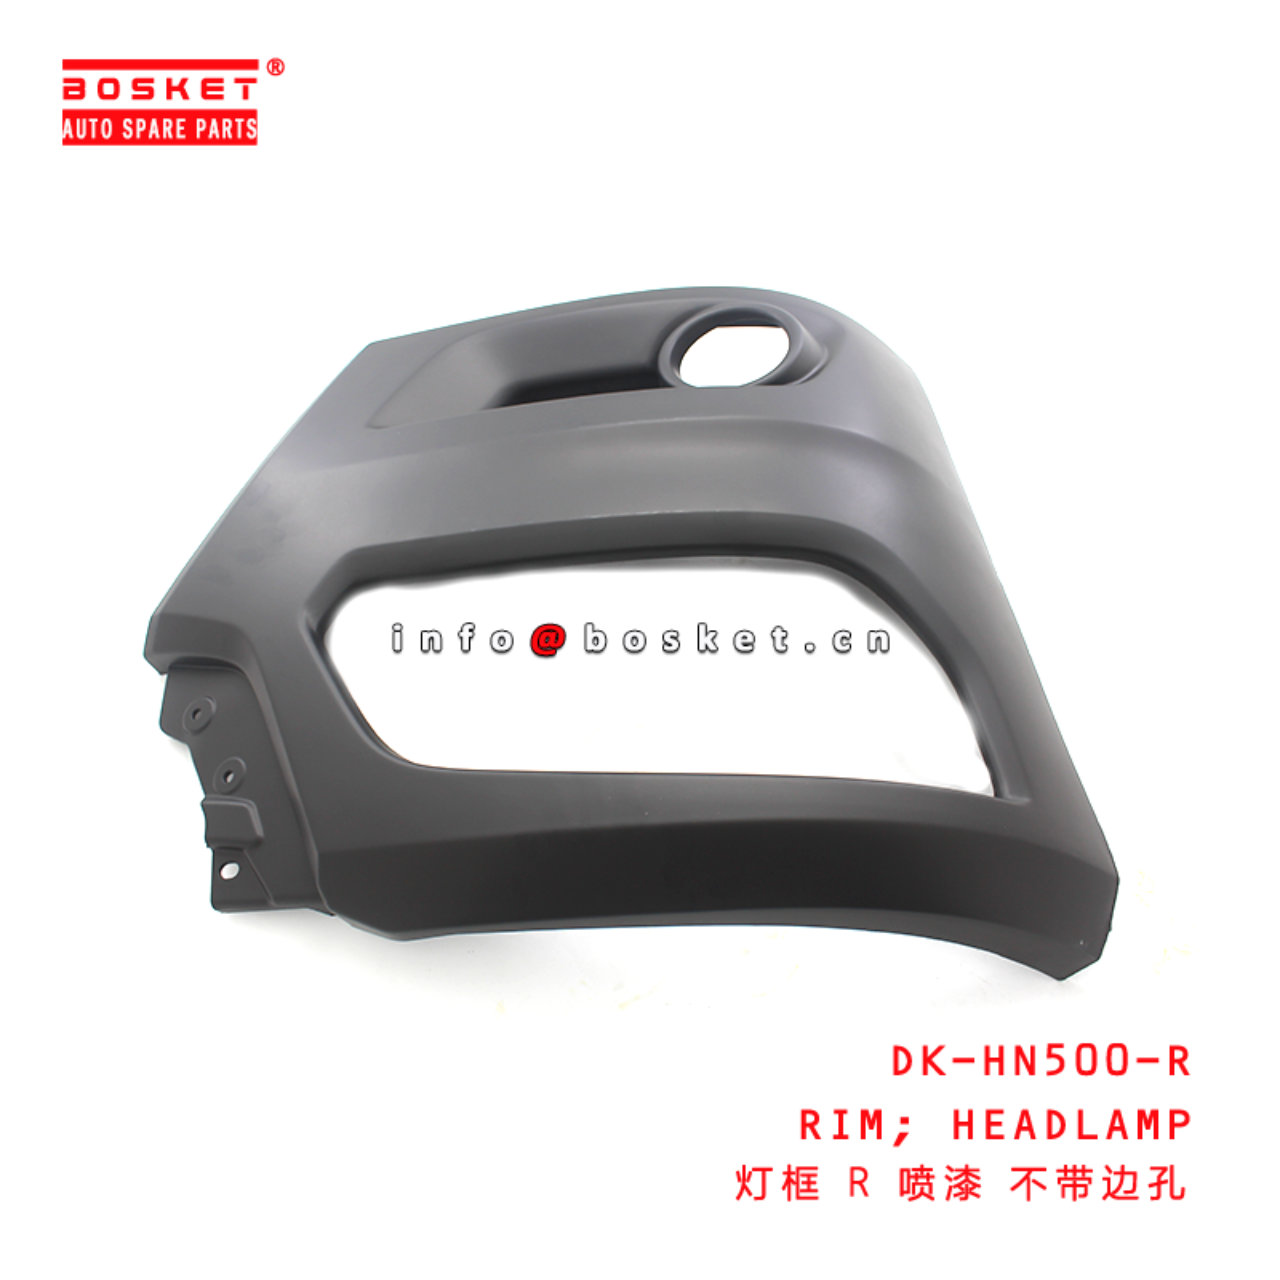 DK-HN500-R Headlamp Rim Suitable for ISUZU HINO 500